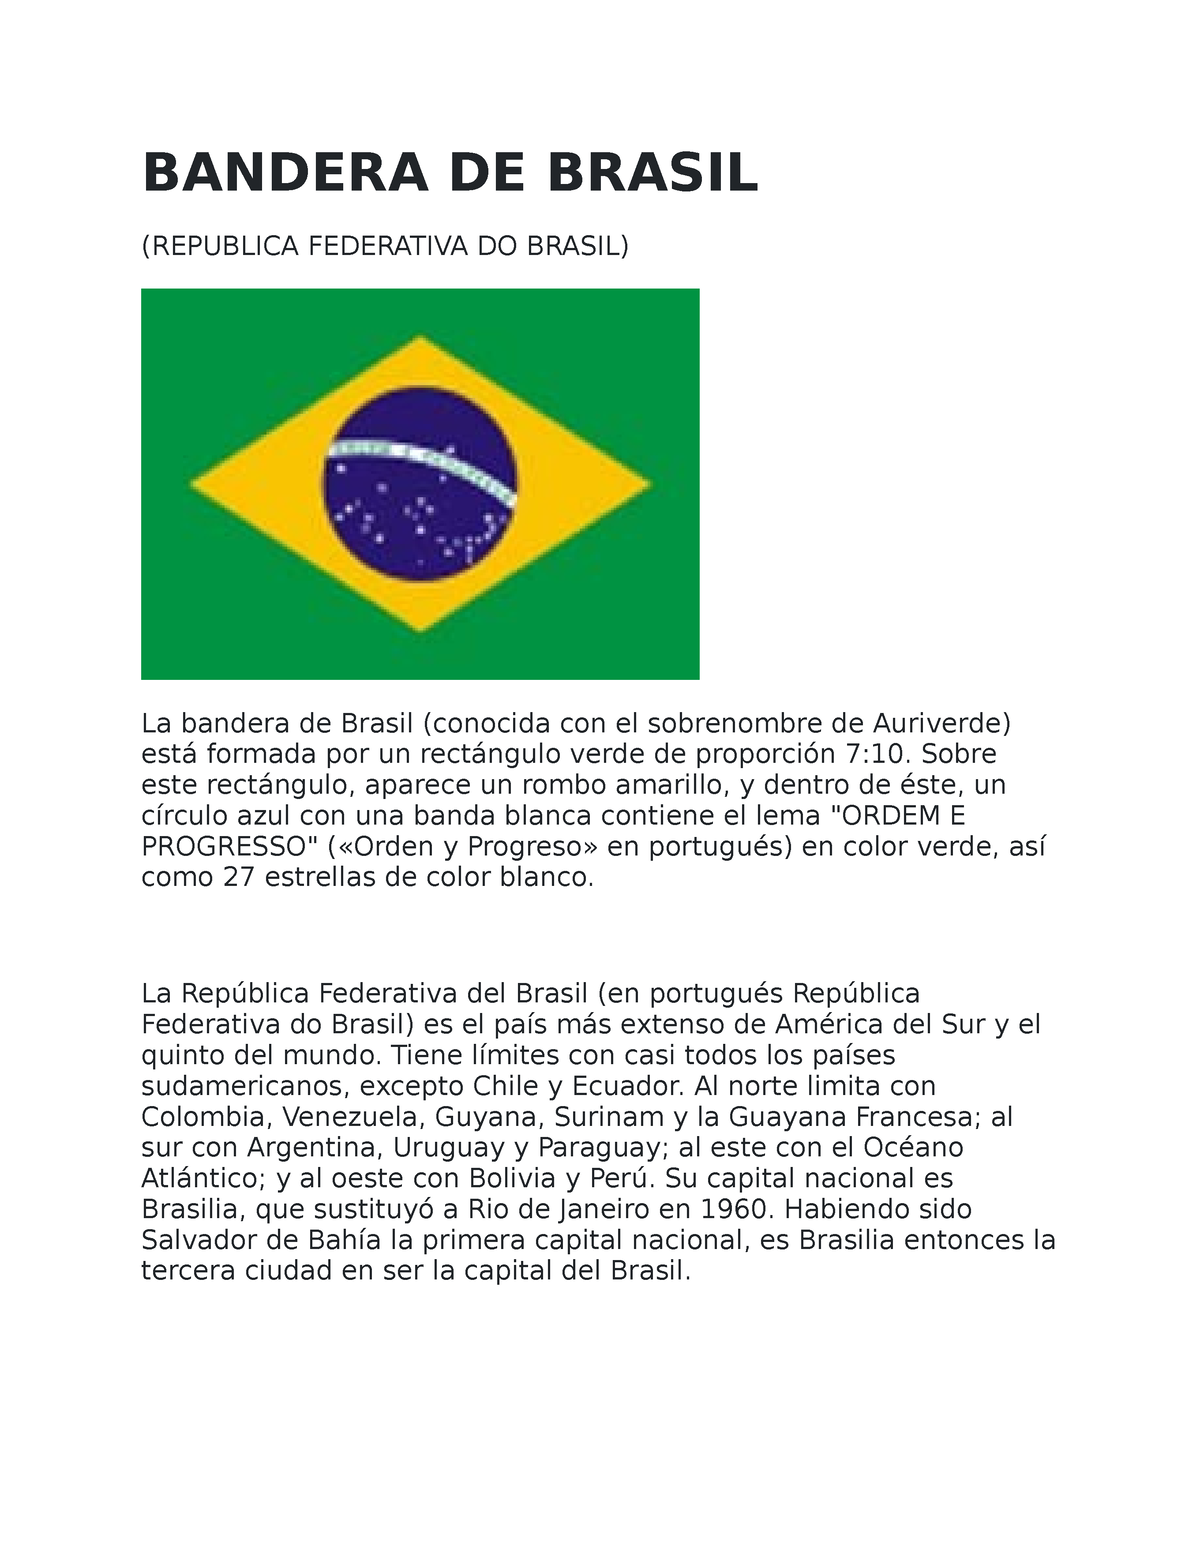 Bandera De Brasil General Information Bandera De Brasil Republica